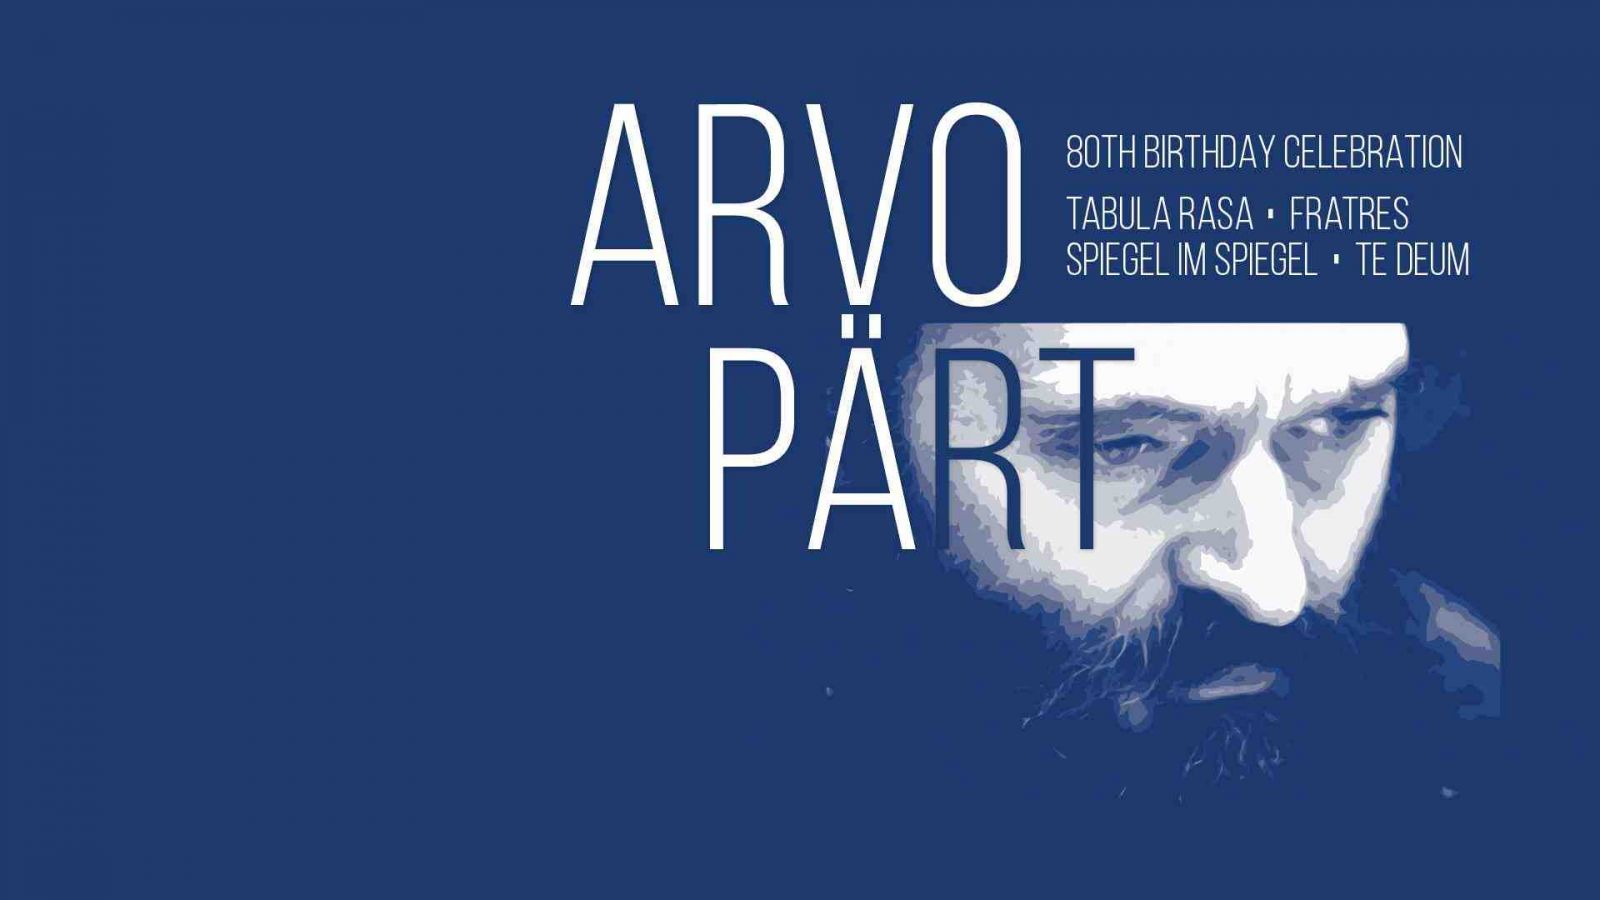 Arvo Pärt 80th Birthday Celebration at St George's in Bristol on 14th October 2015